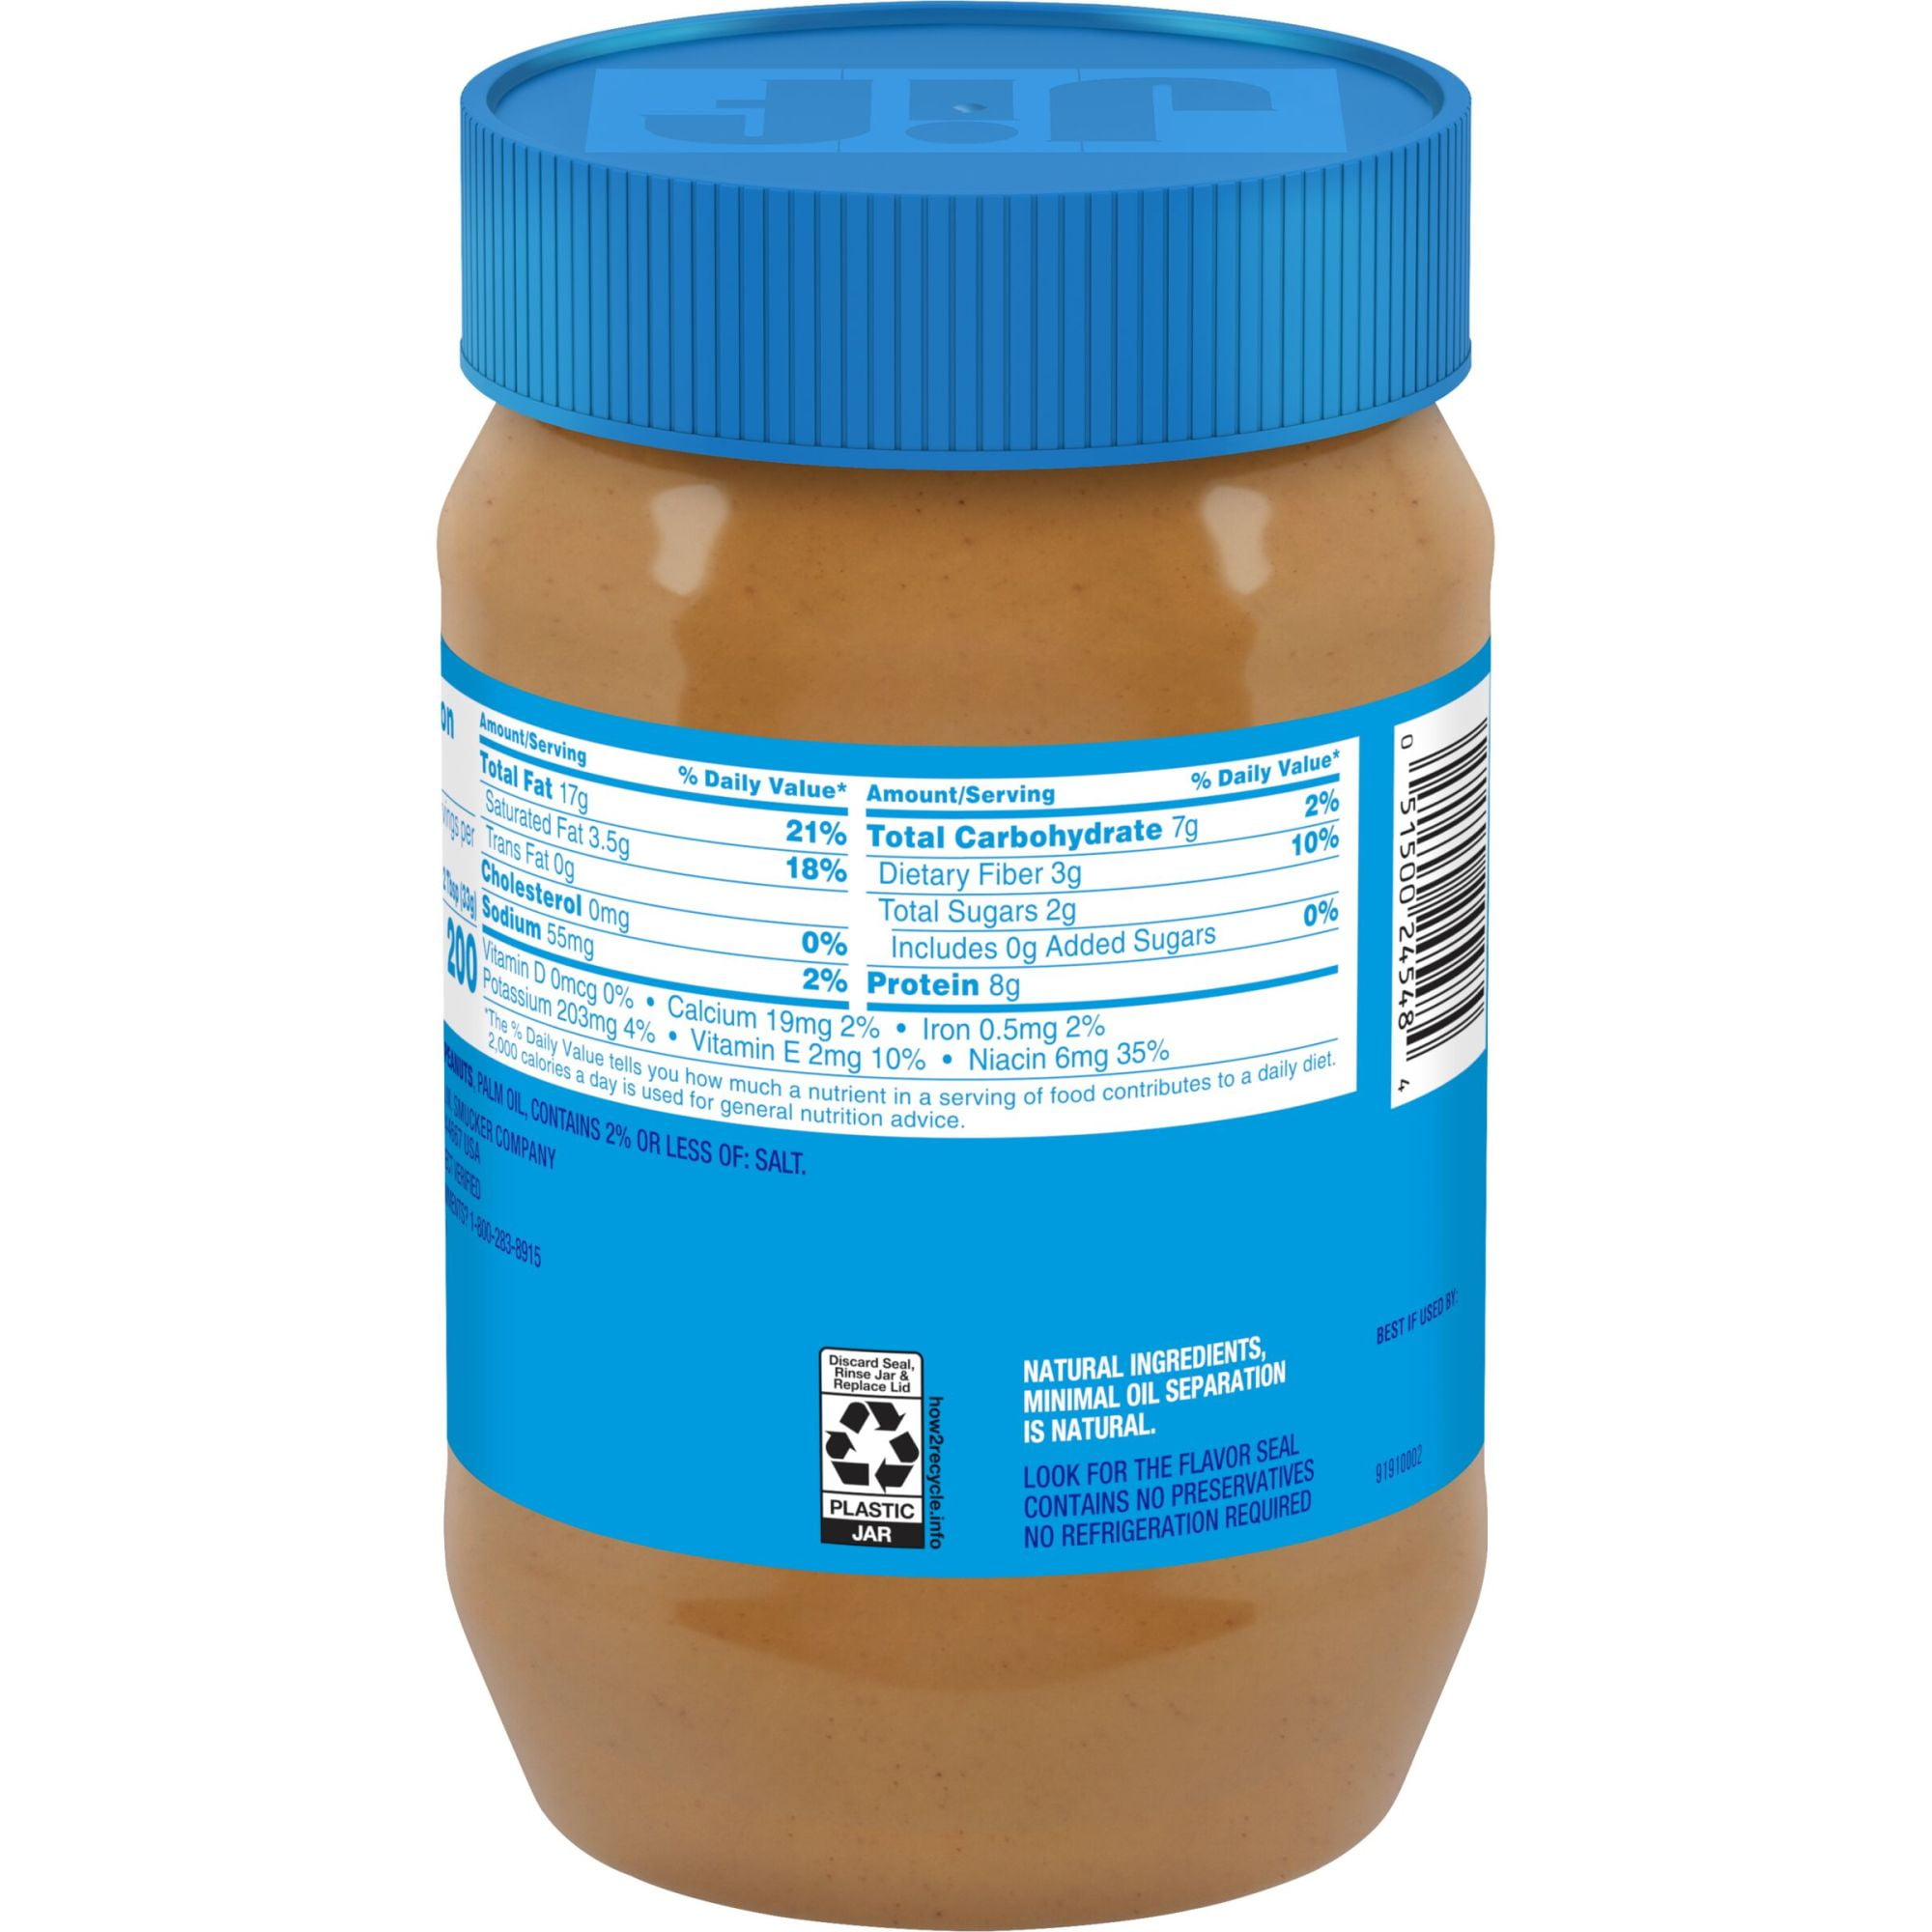 Jif Natural Crunchy Peanut Butter Spread, 40 oz - Pay Less Super Markets